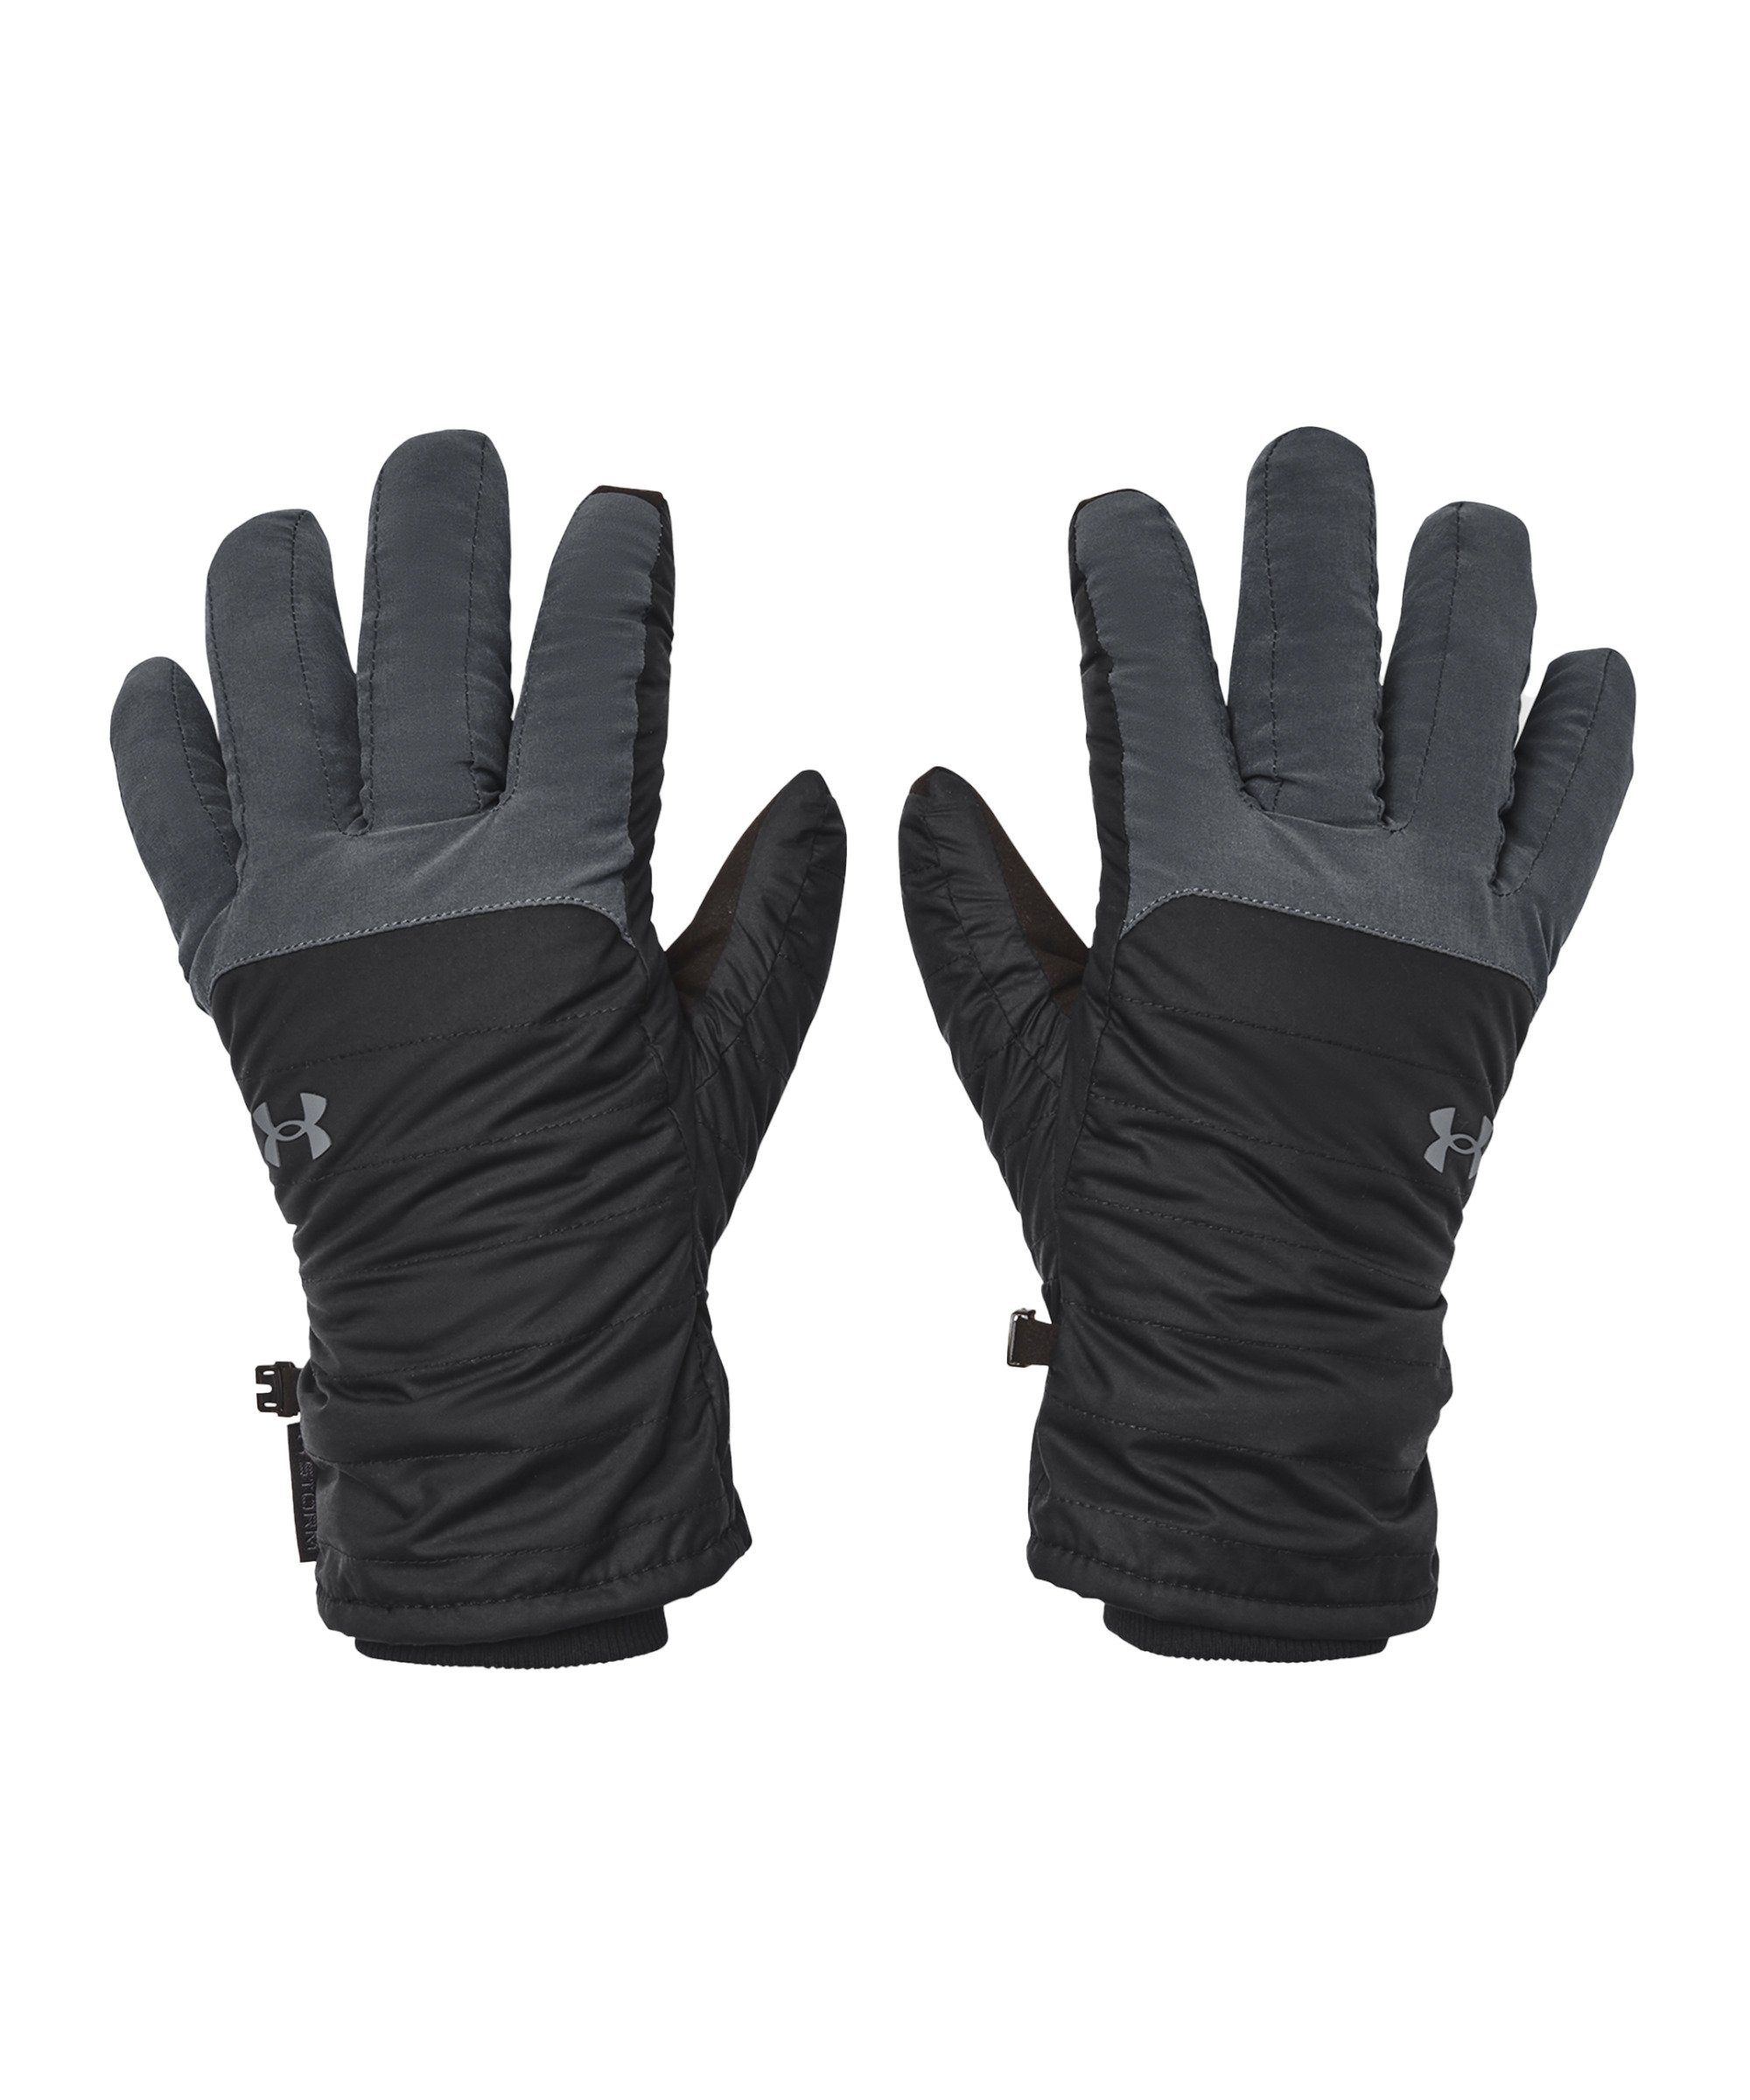 Under Armour® Feldspielerhandschuhe Storm Insulated Handschuhe